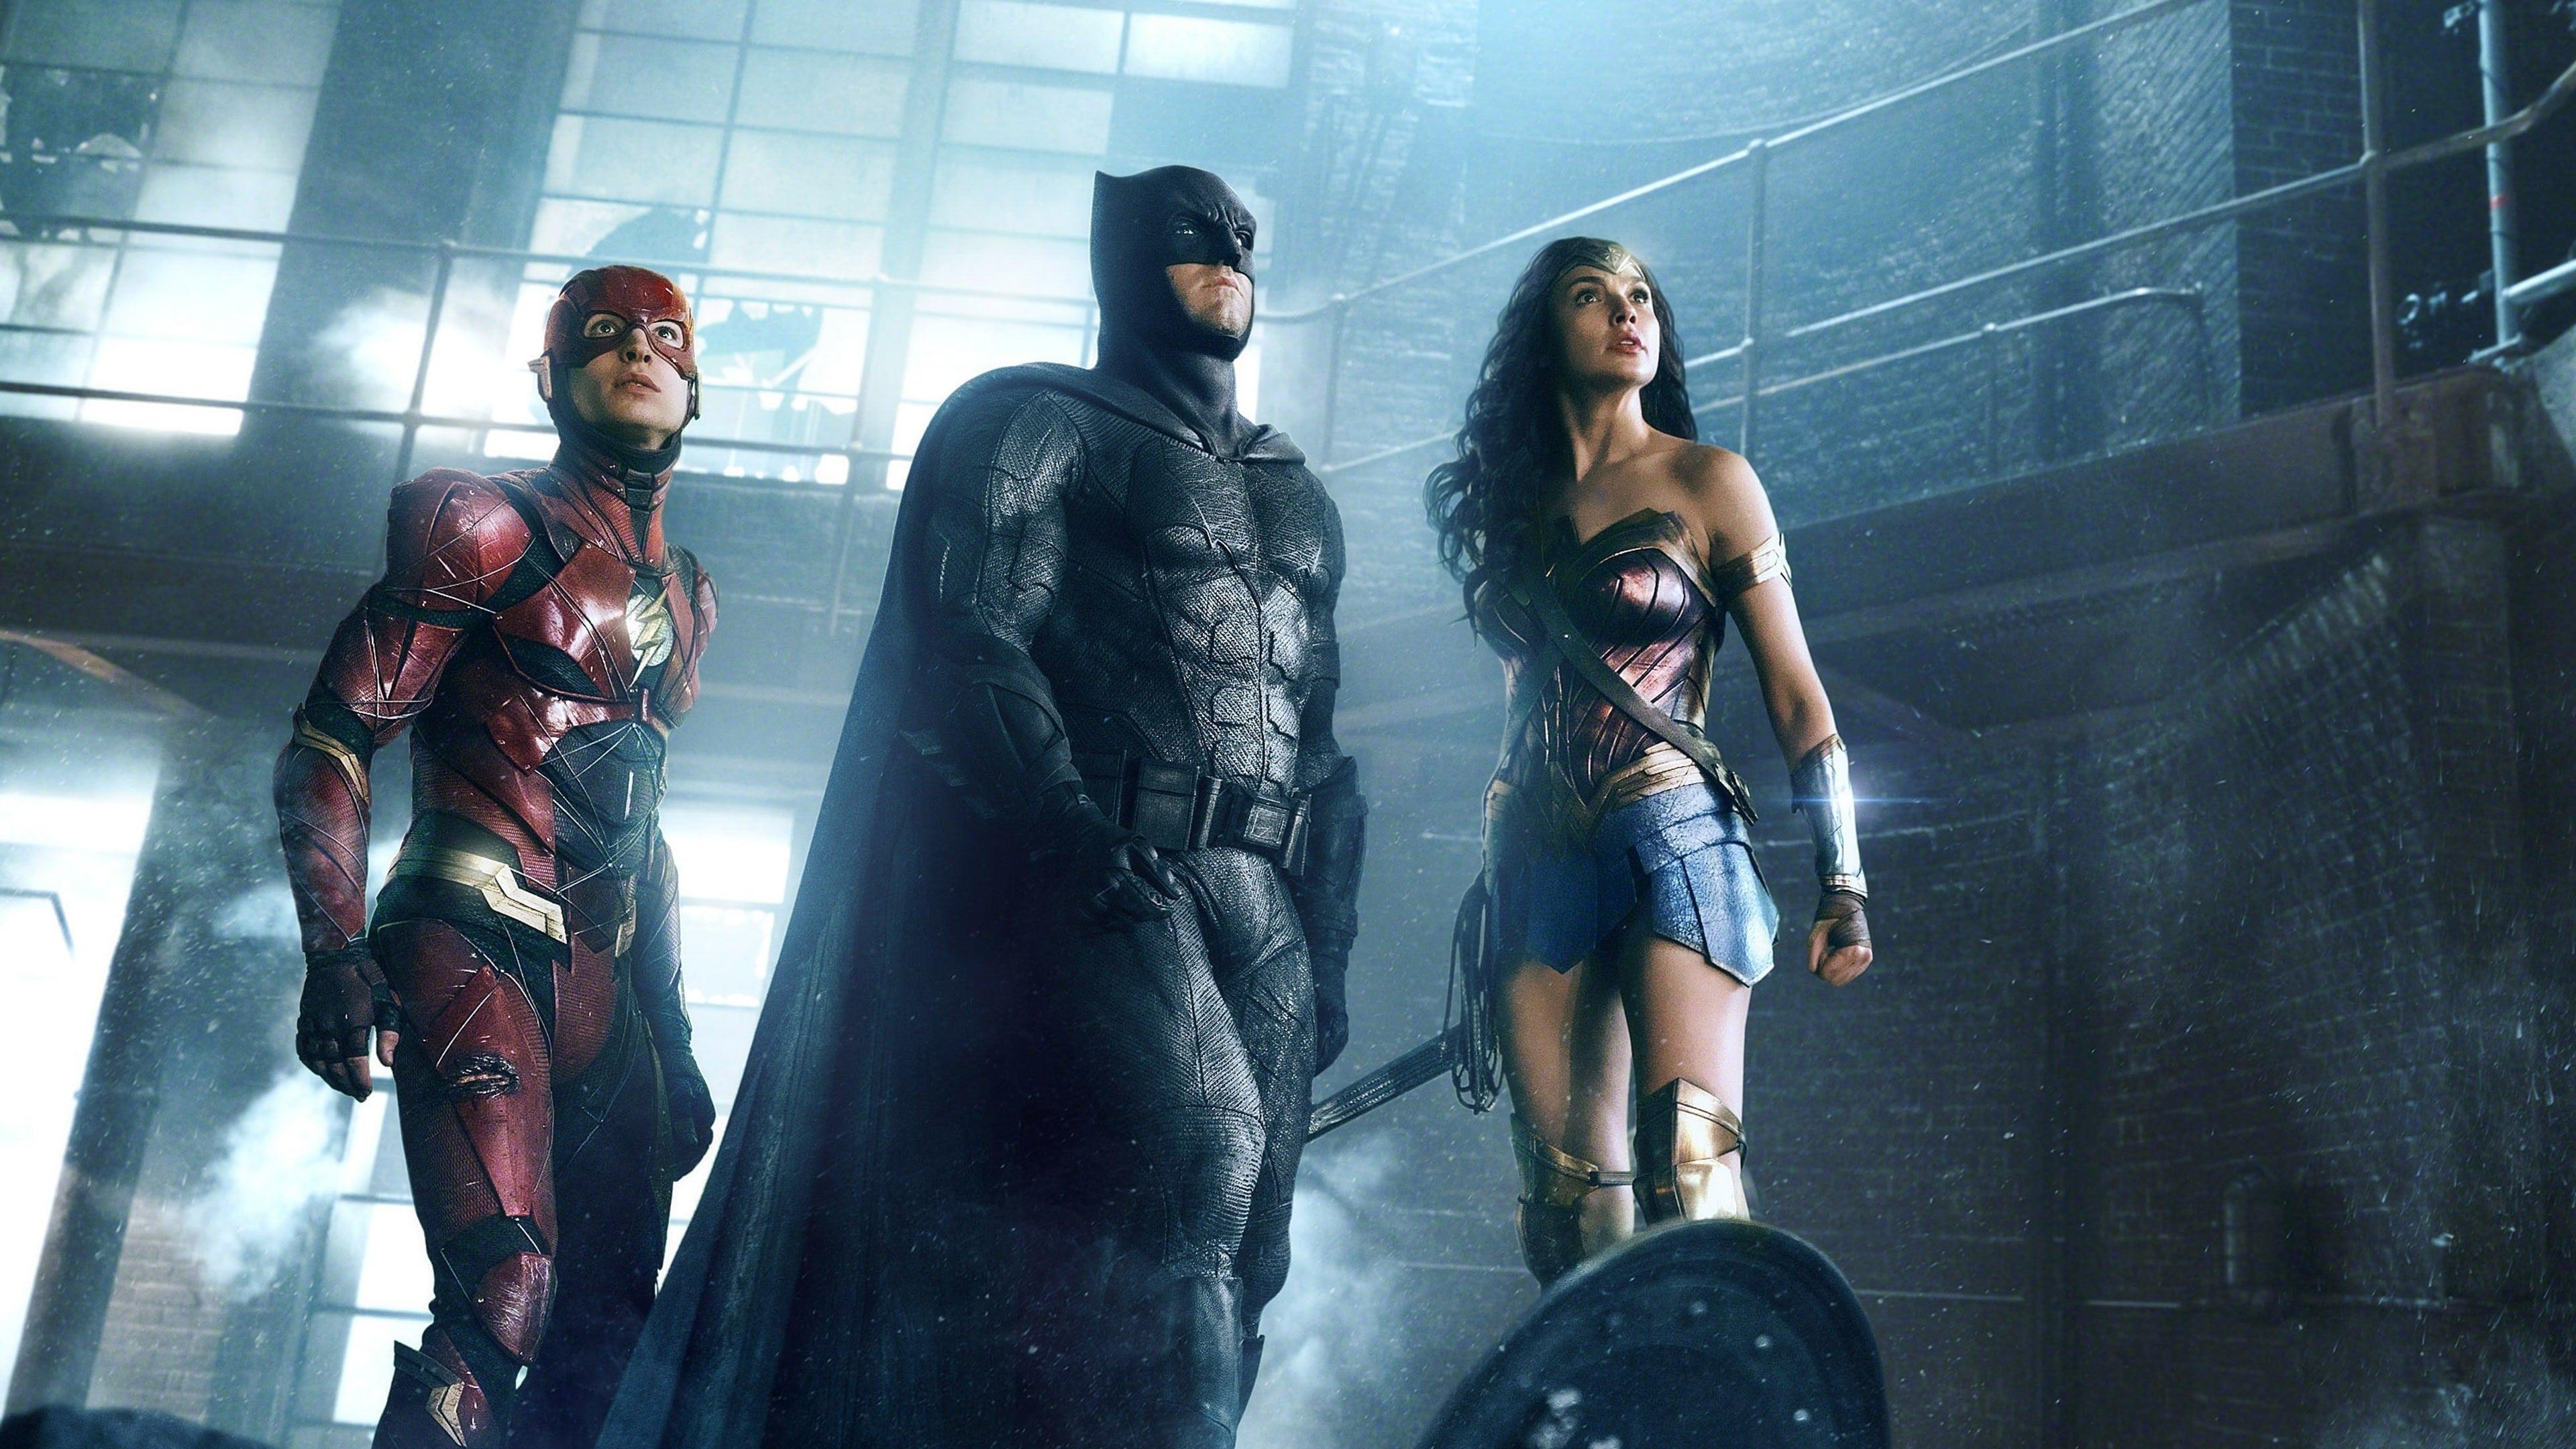 Zack Snyder's Justice League backdrop